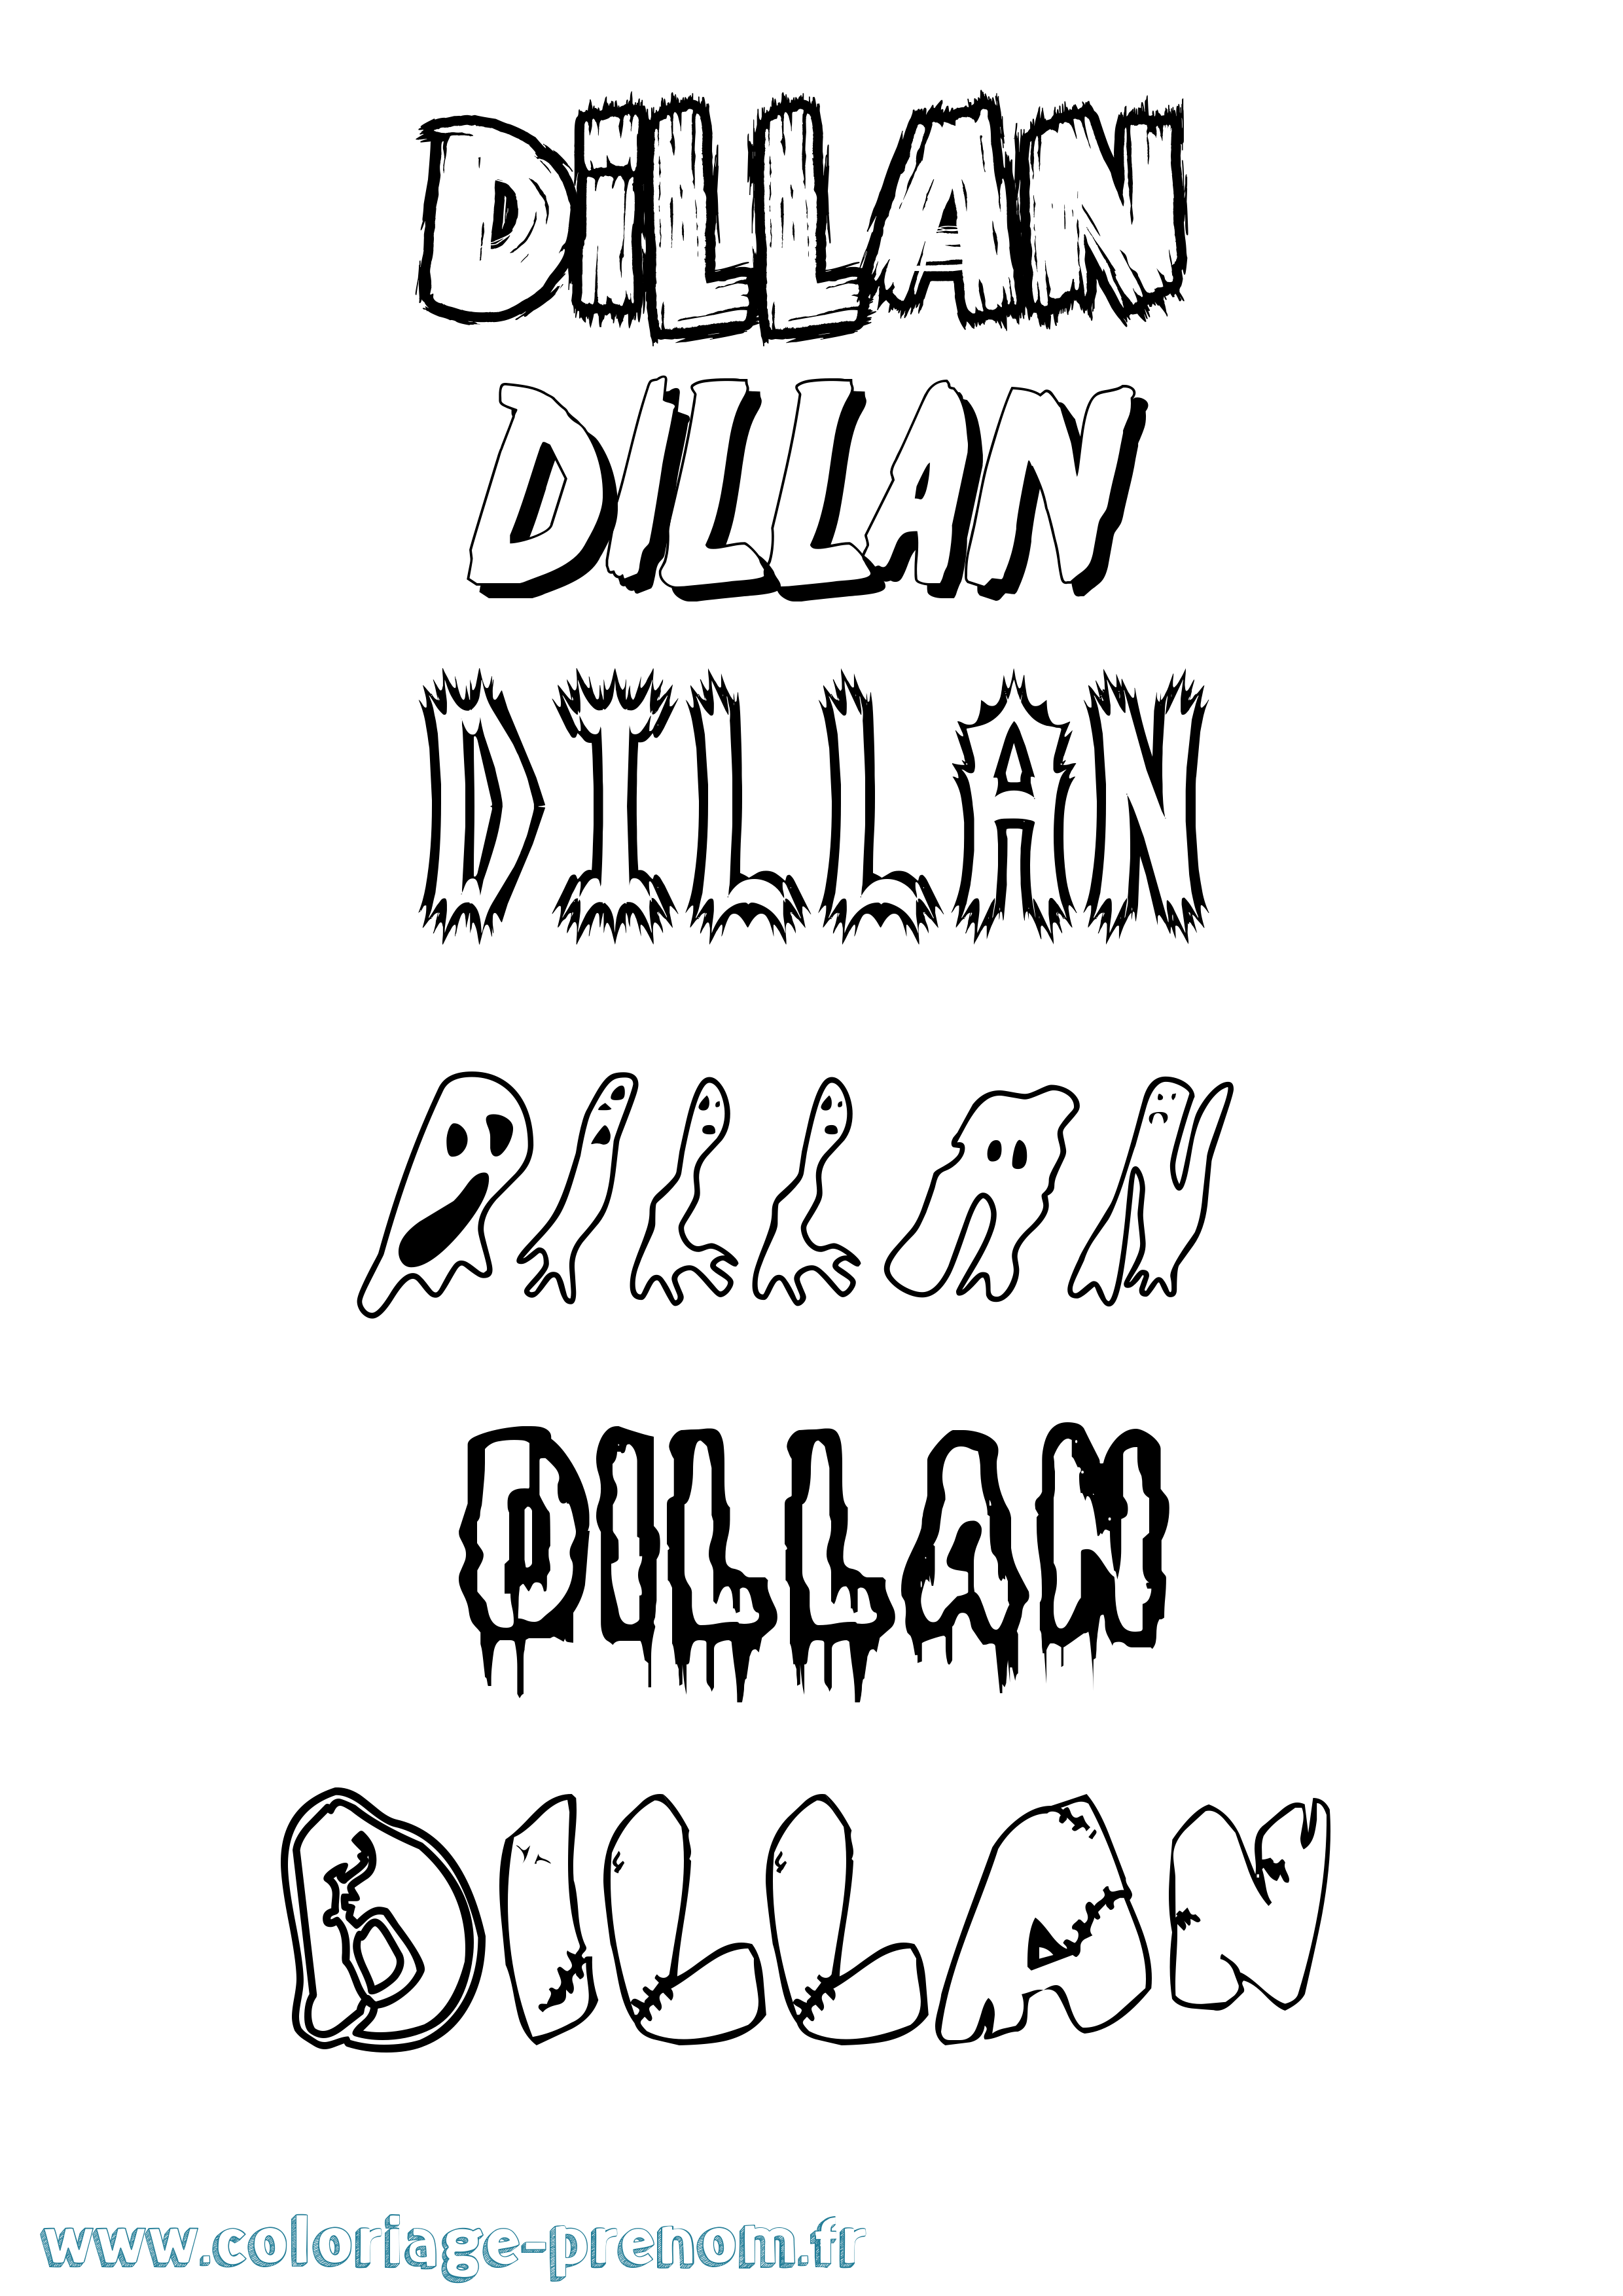 Coloriage prénom Dillan Frisson